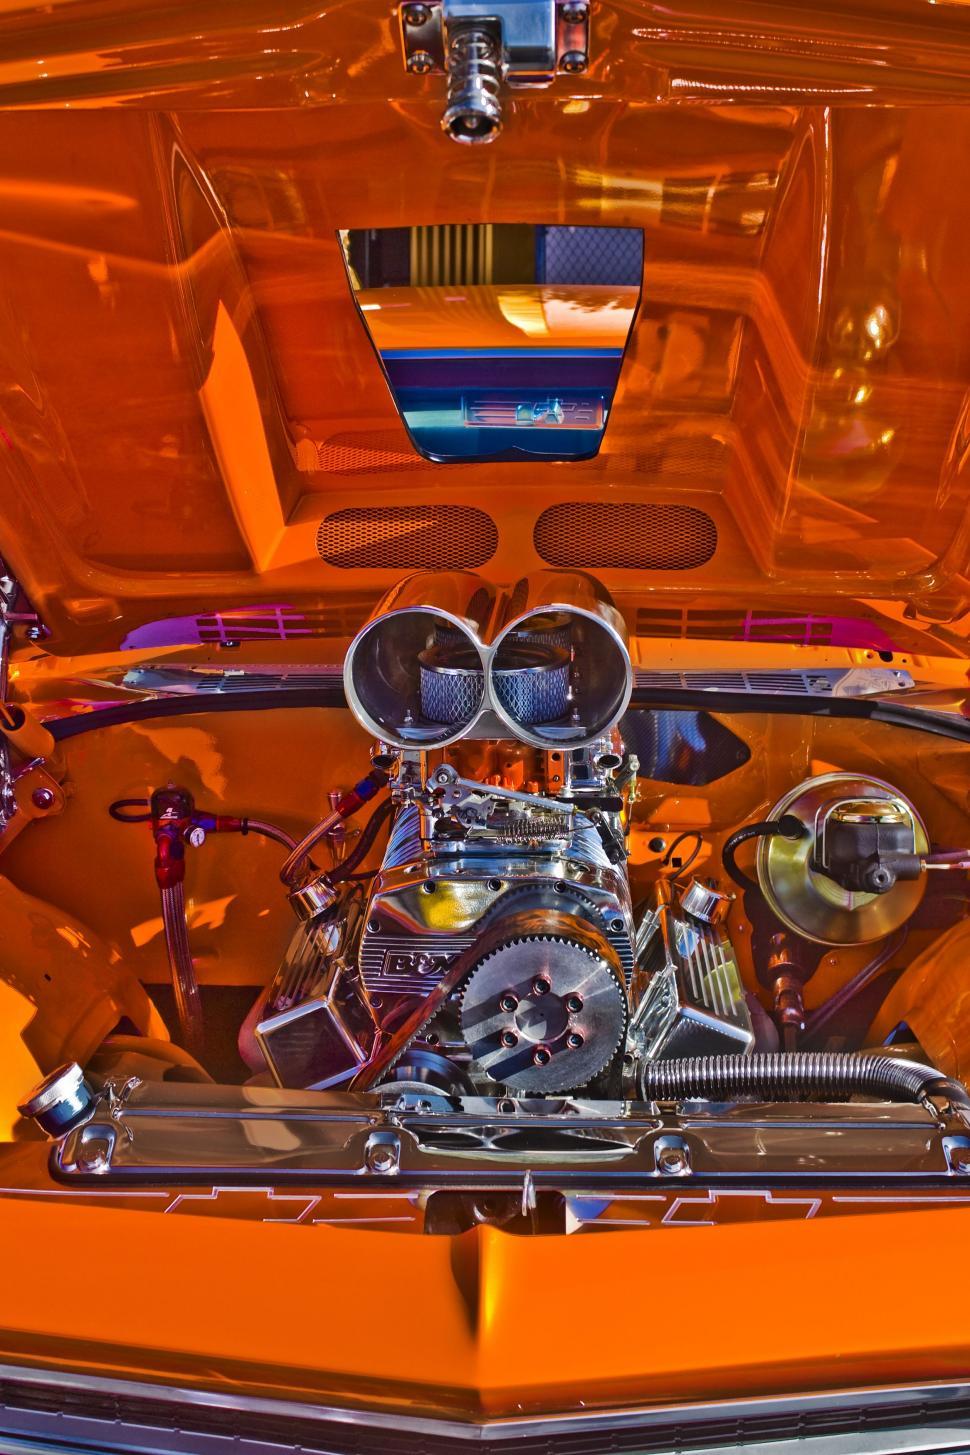 Free Image of Car Engine  